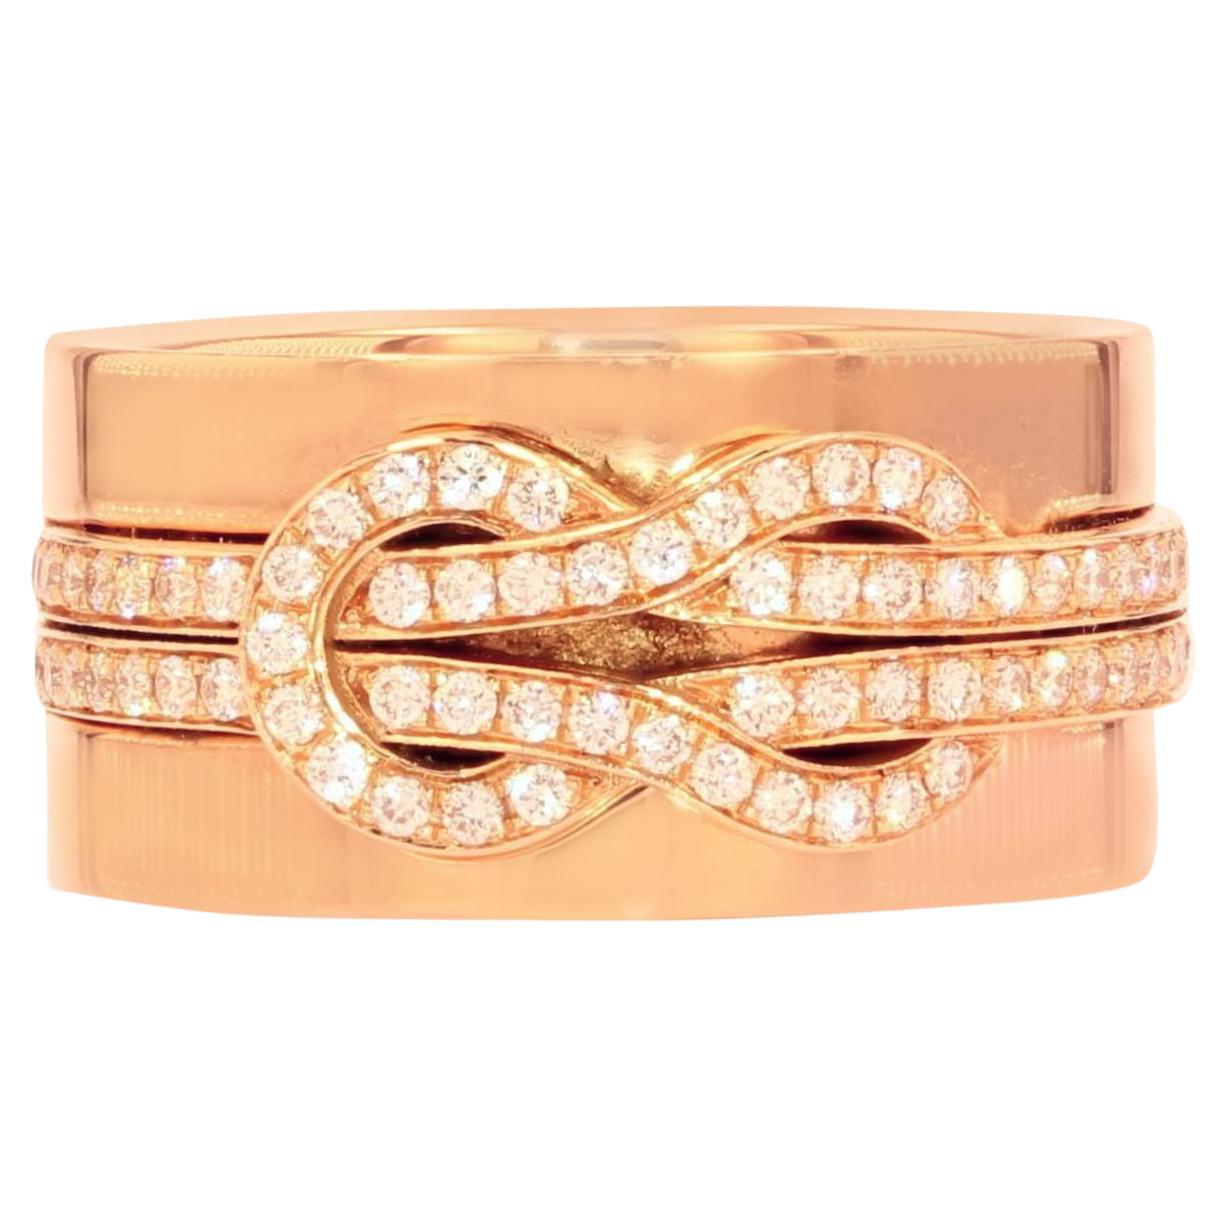 Fred Chance Infinie Diamonds 18 Karat Rose Gold Medium Model Band Ring